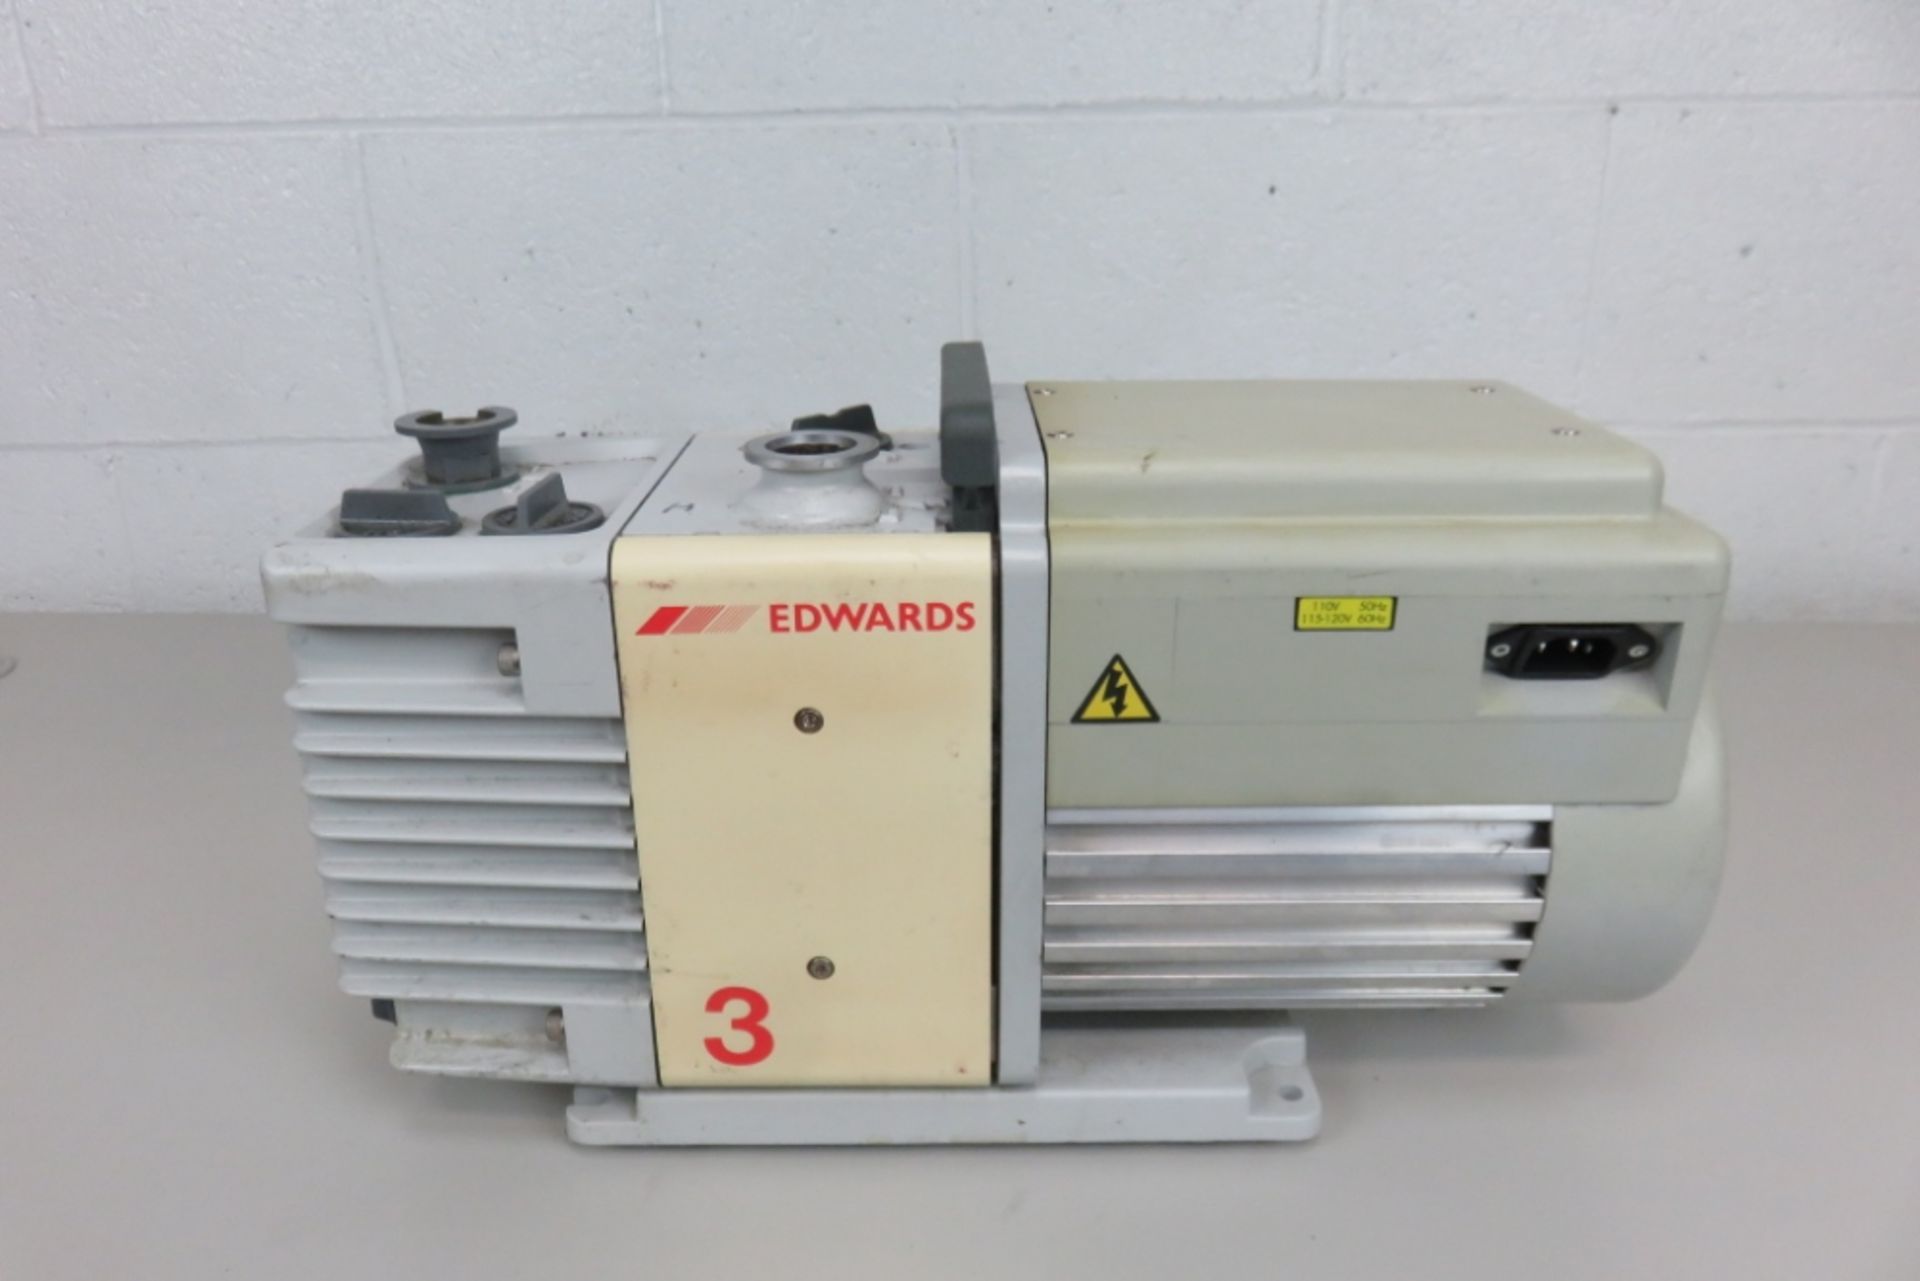 Edwards 3 Model RV3 Vacuum Pump - Image 2 of 5